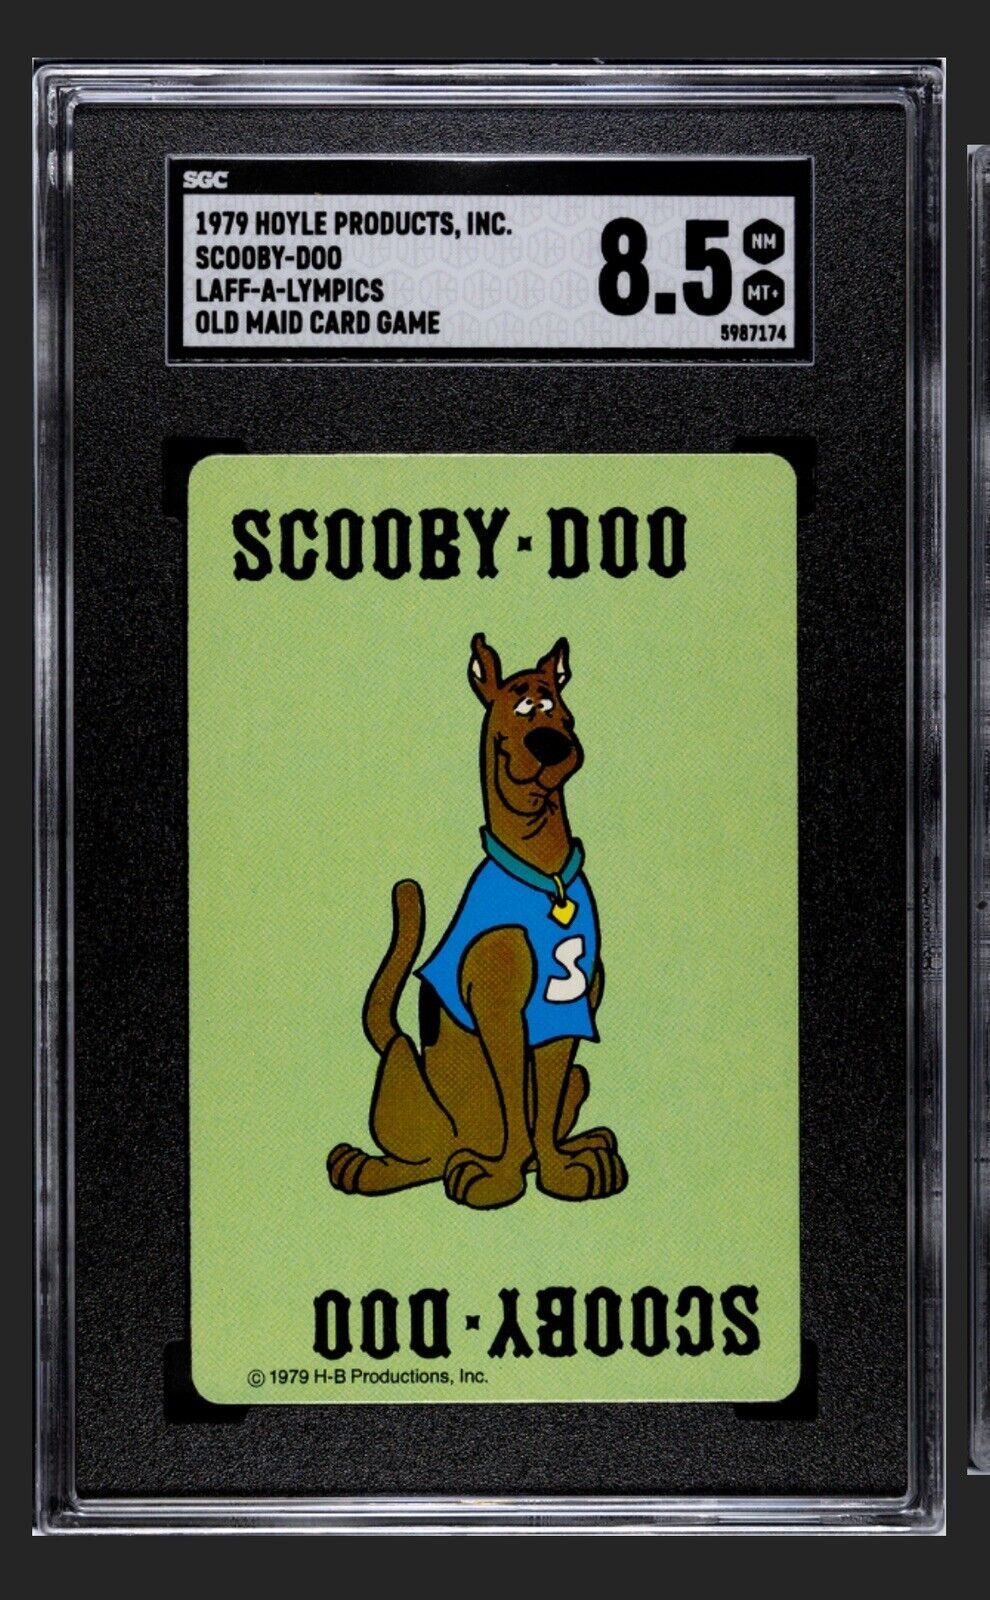 RARE Scooby Doo RC - 1979 Hoyle Hanna Barbera Old Maid -Laff-A-Lympics- SGC 8.5